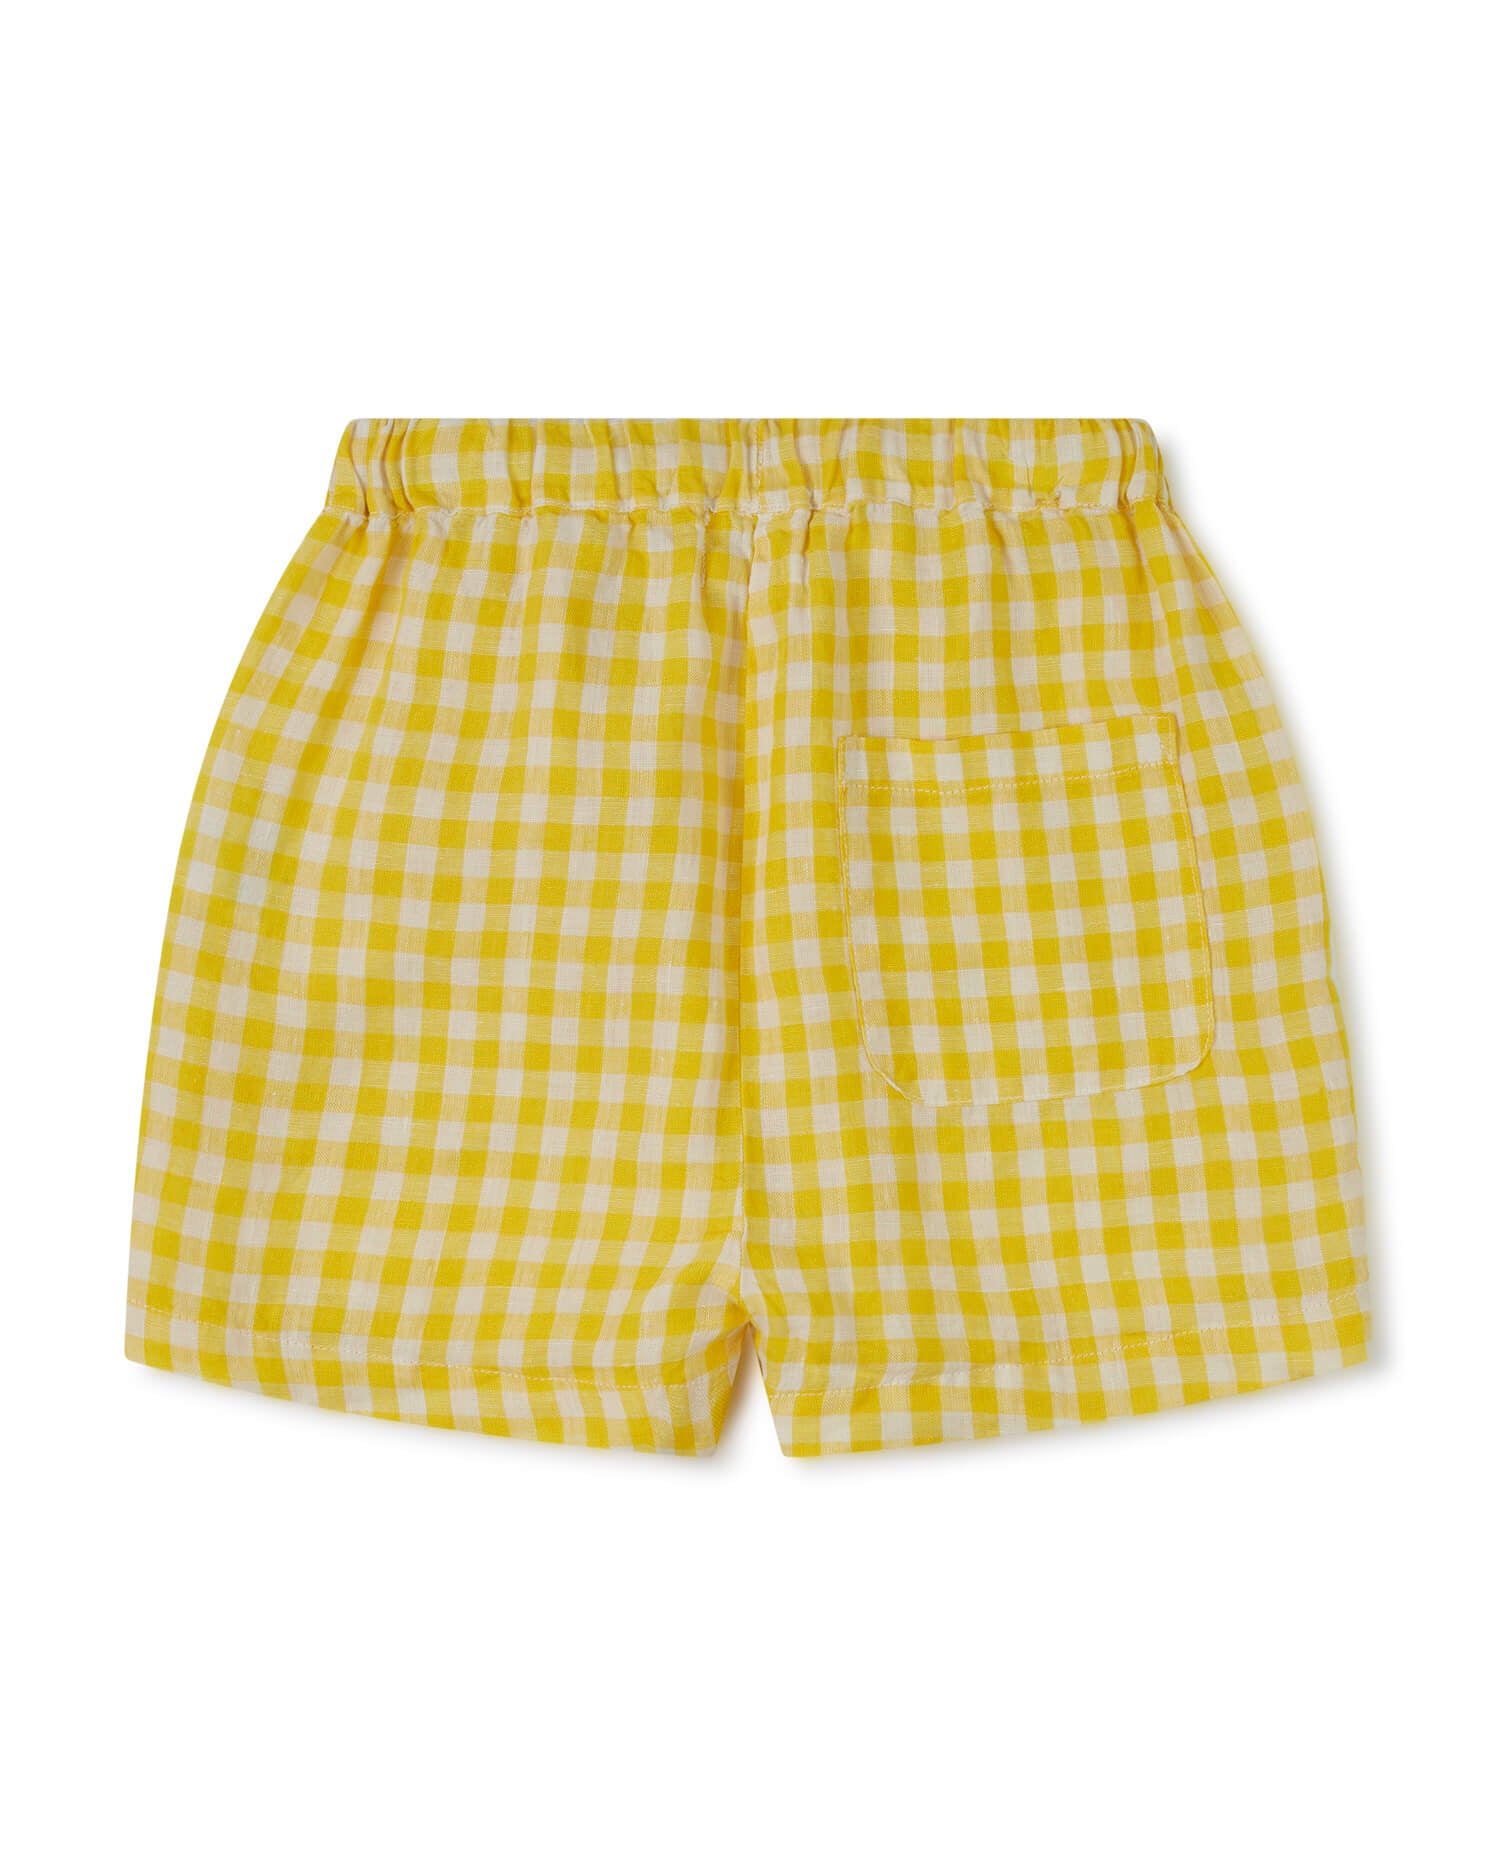 Classic Shorts yellow gingham